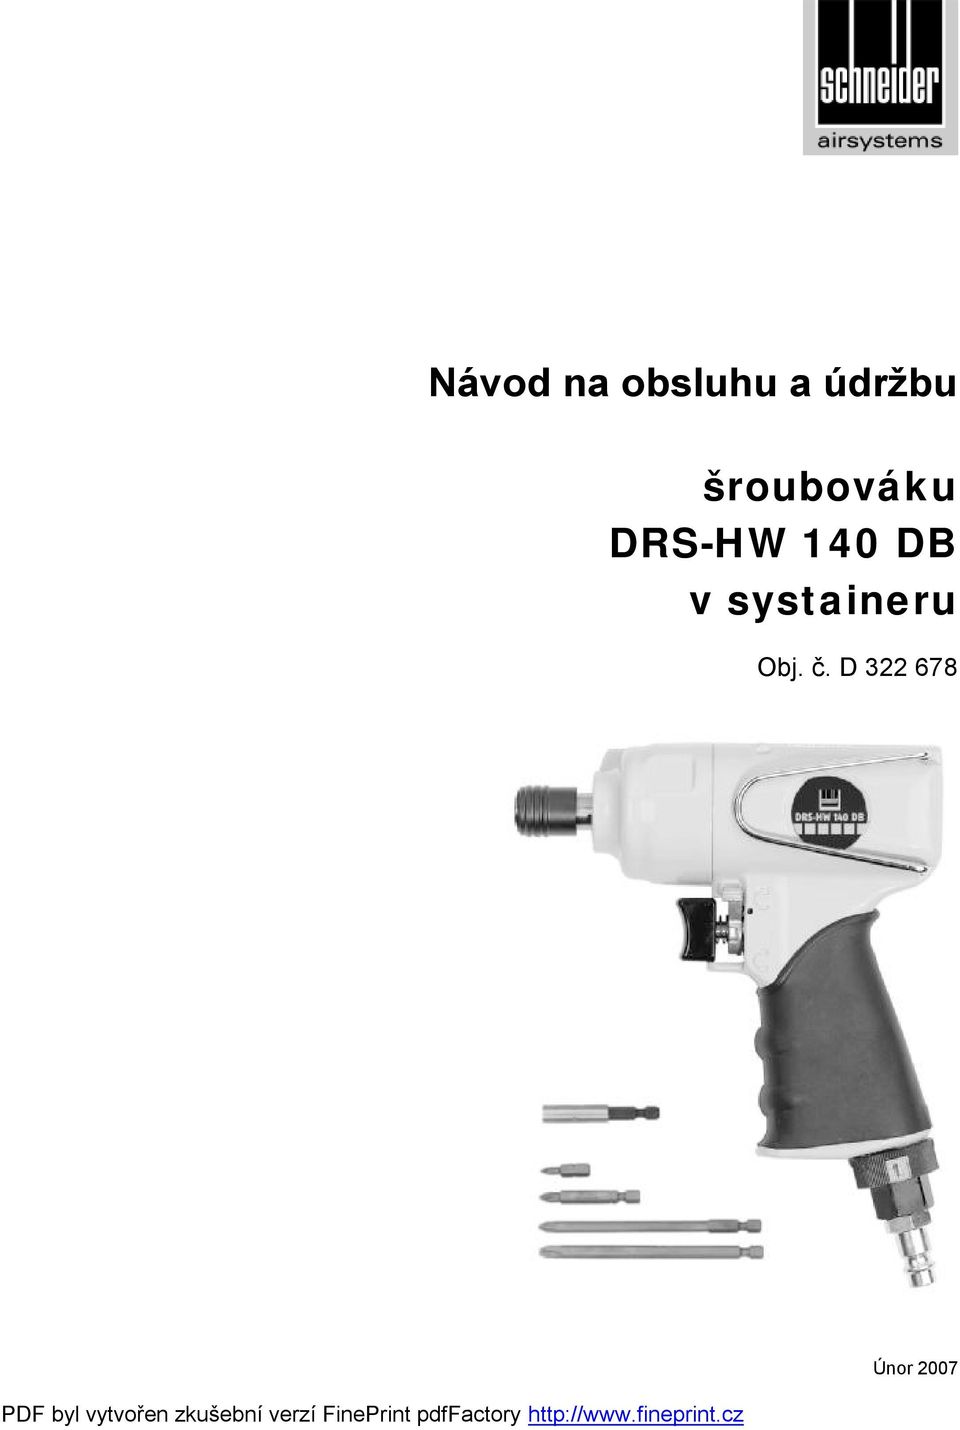 DRS-HW 140 DB v